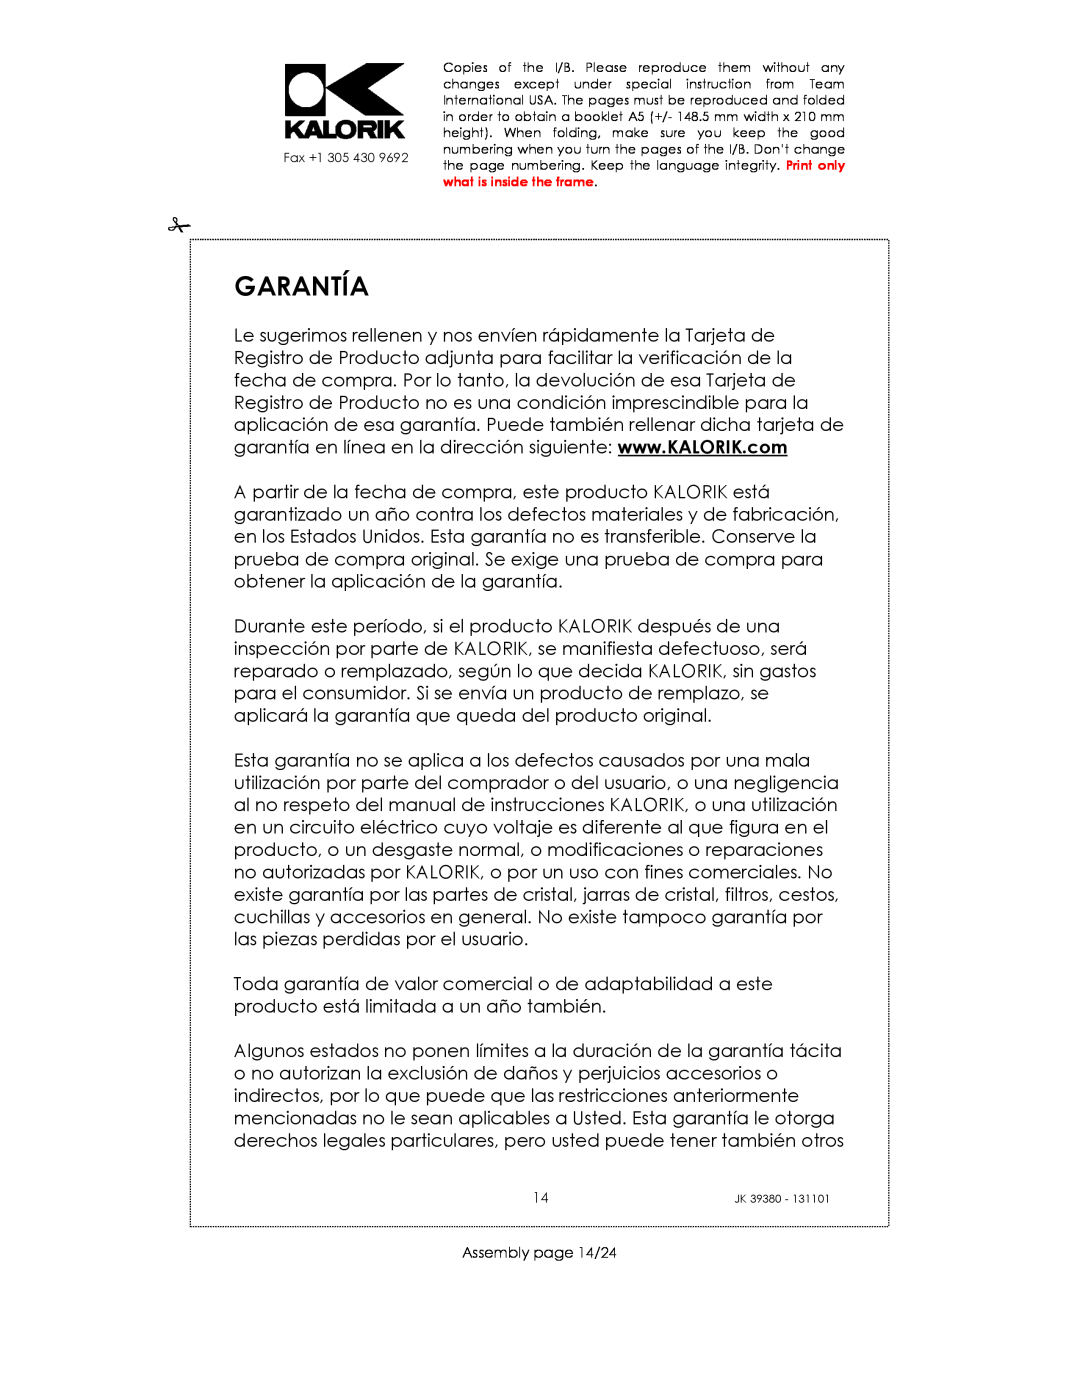 Kalorik JK 39380 manual Garantía, Assembly page 14/24 